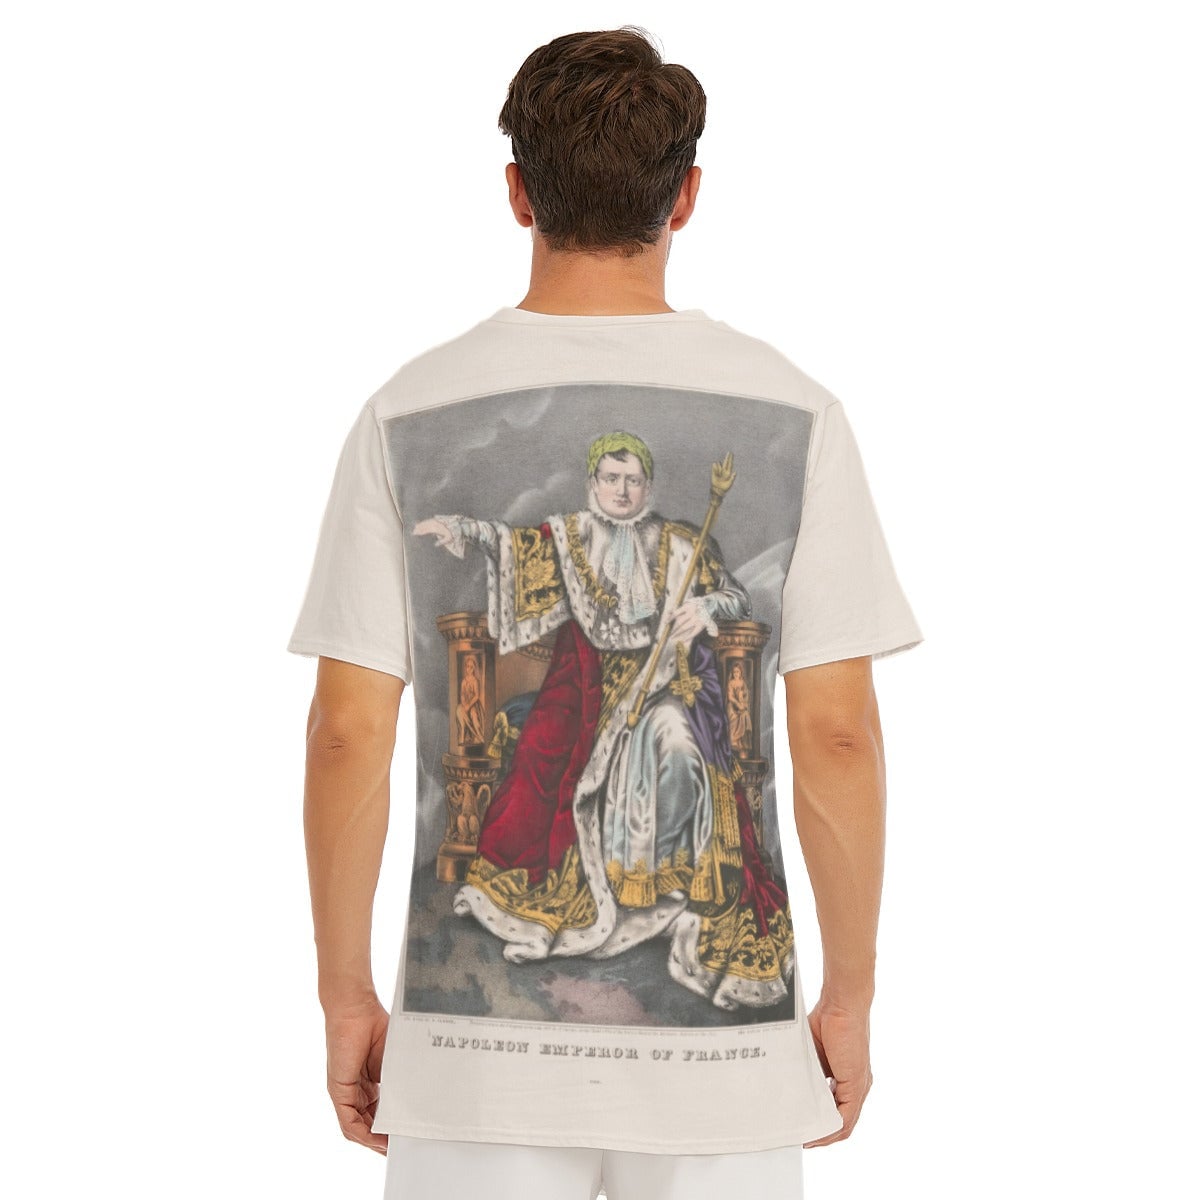 Emperor of France Napoleon Bonaparte T-Shirt